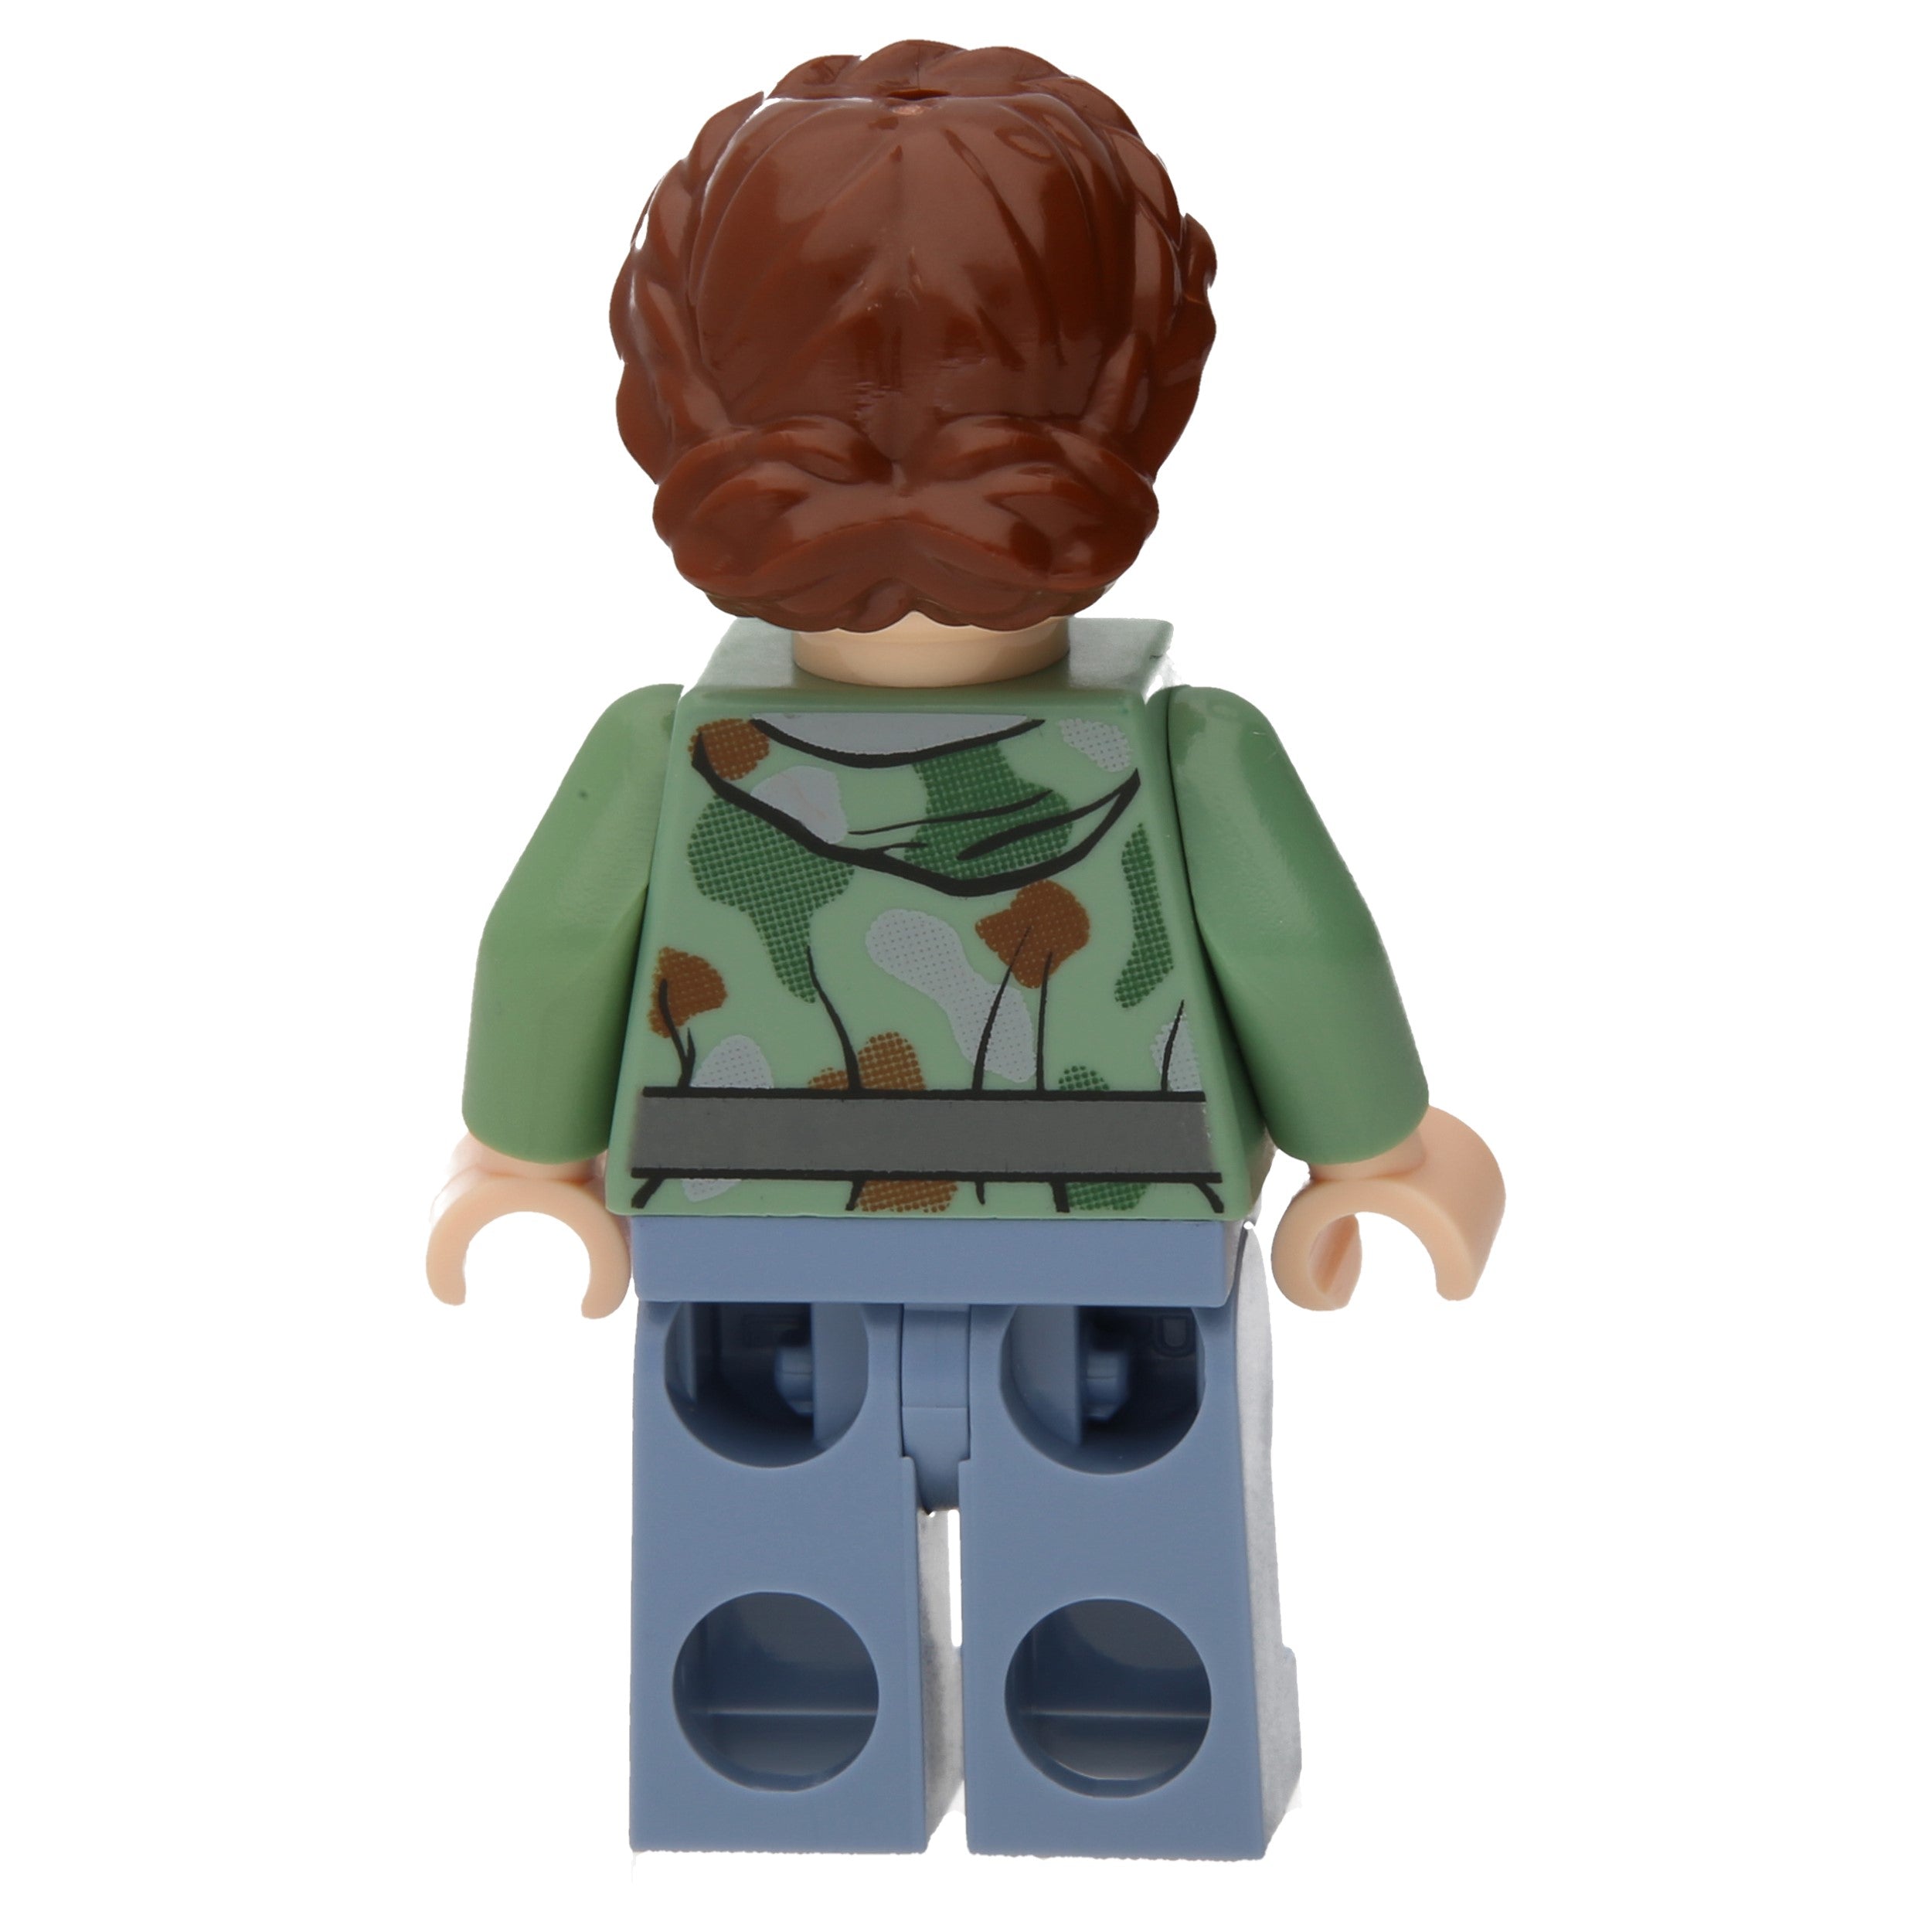 LEGO Star Wars Minifigure - Princess Leia (Endor Outift)